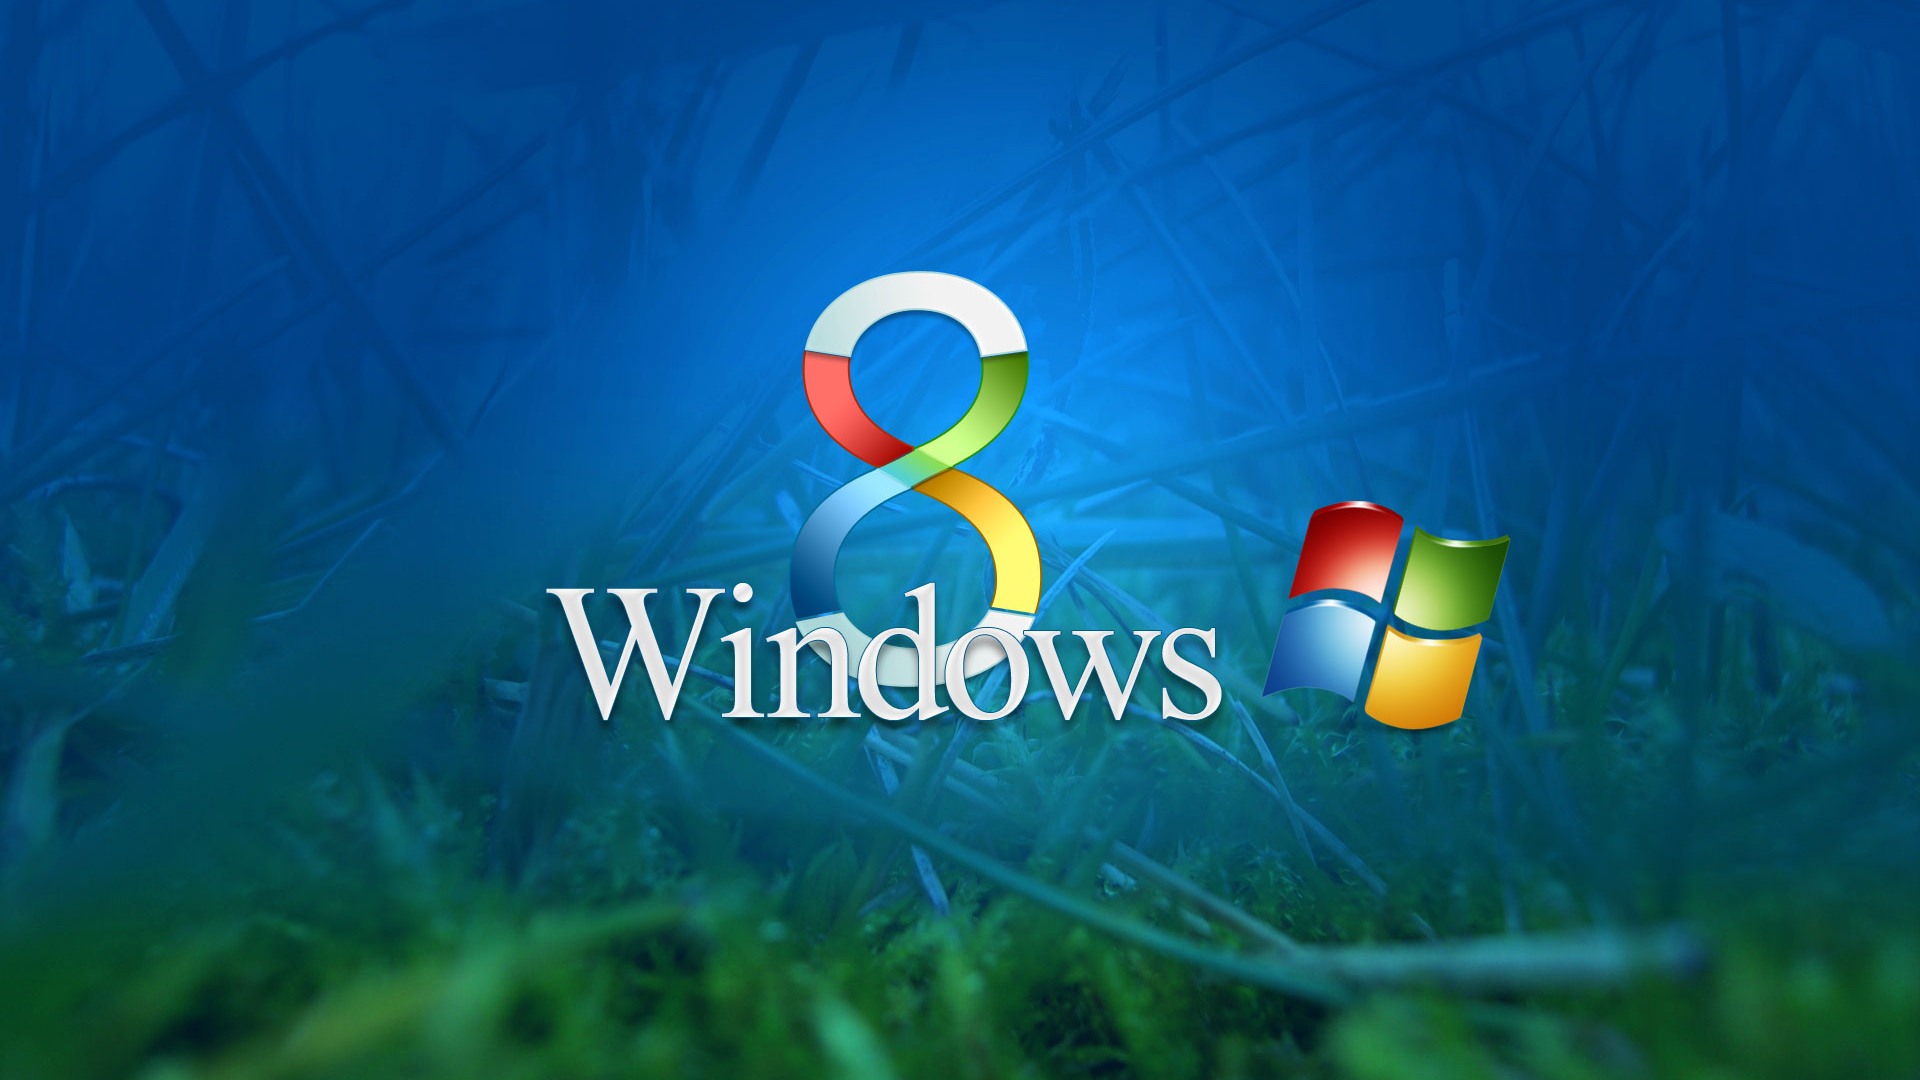 Windows 8 主题壁纸 (二)1 - 1920x1080